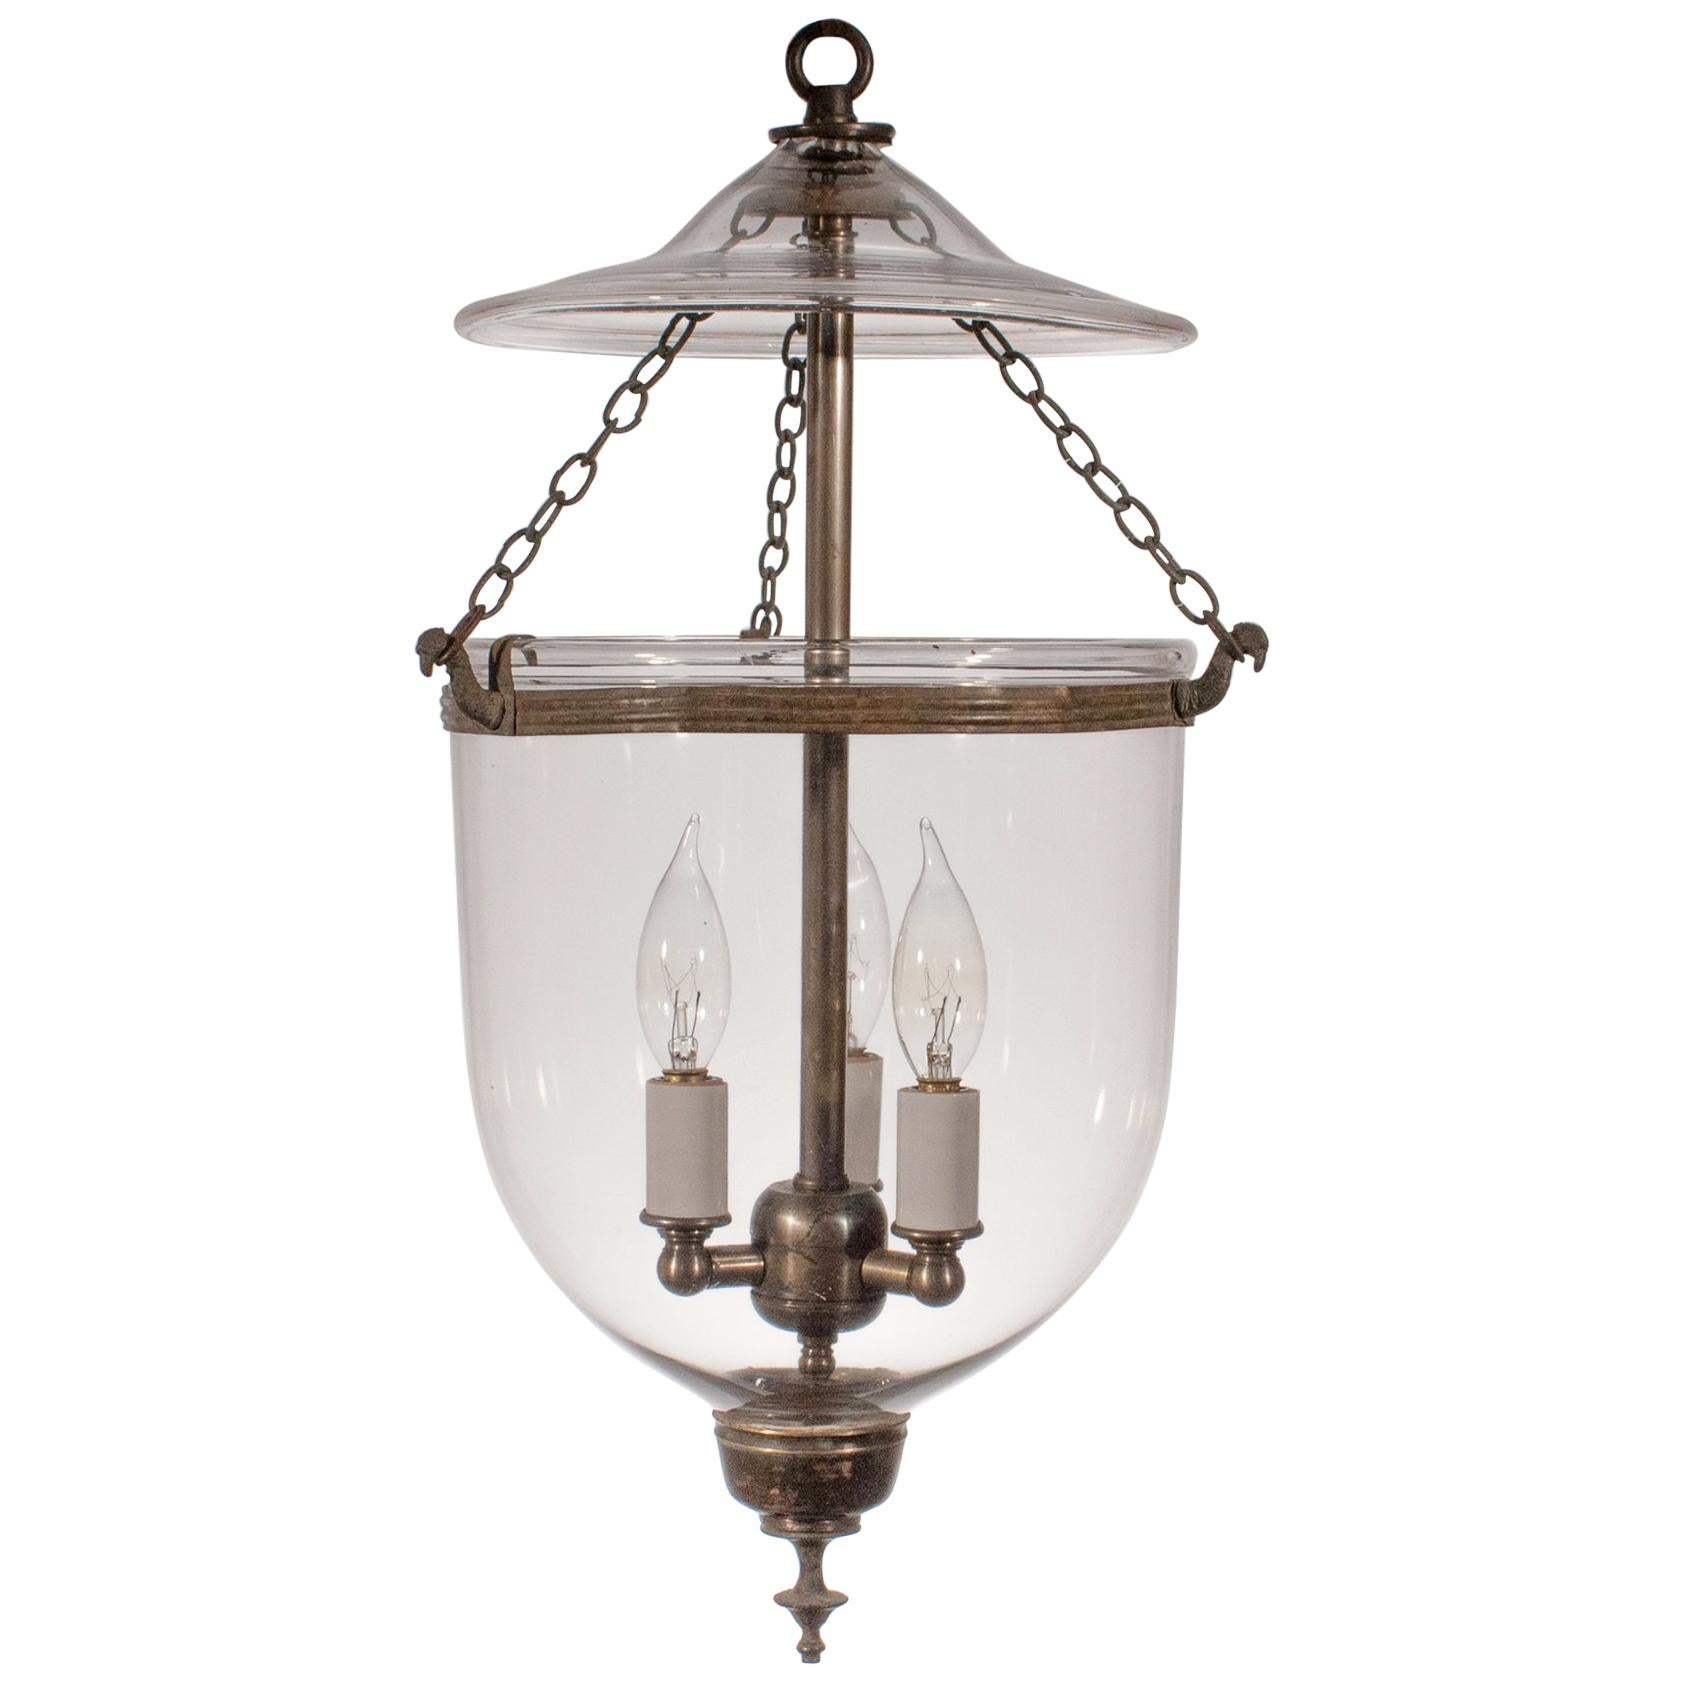  Petite Handblown Glass Bell Jar Lantern